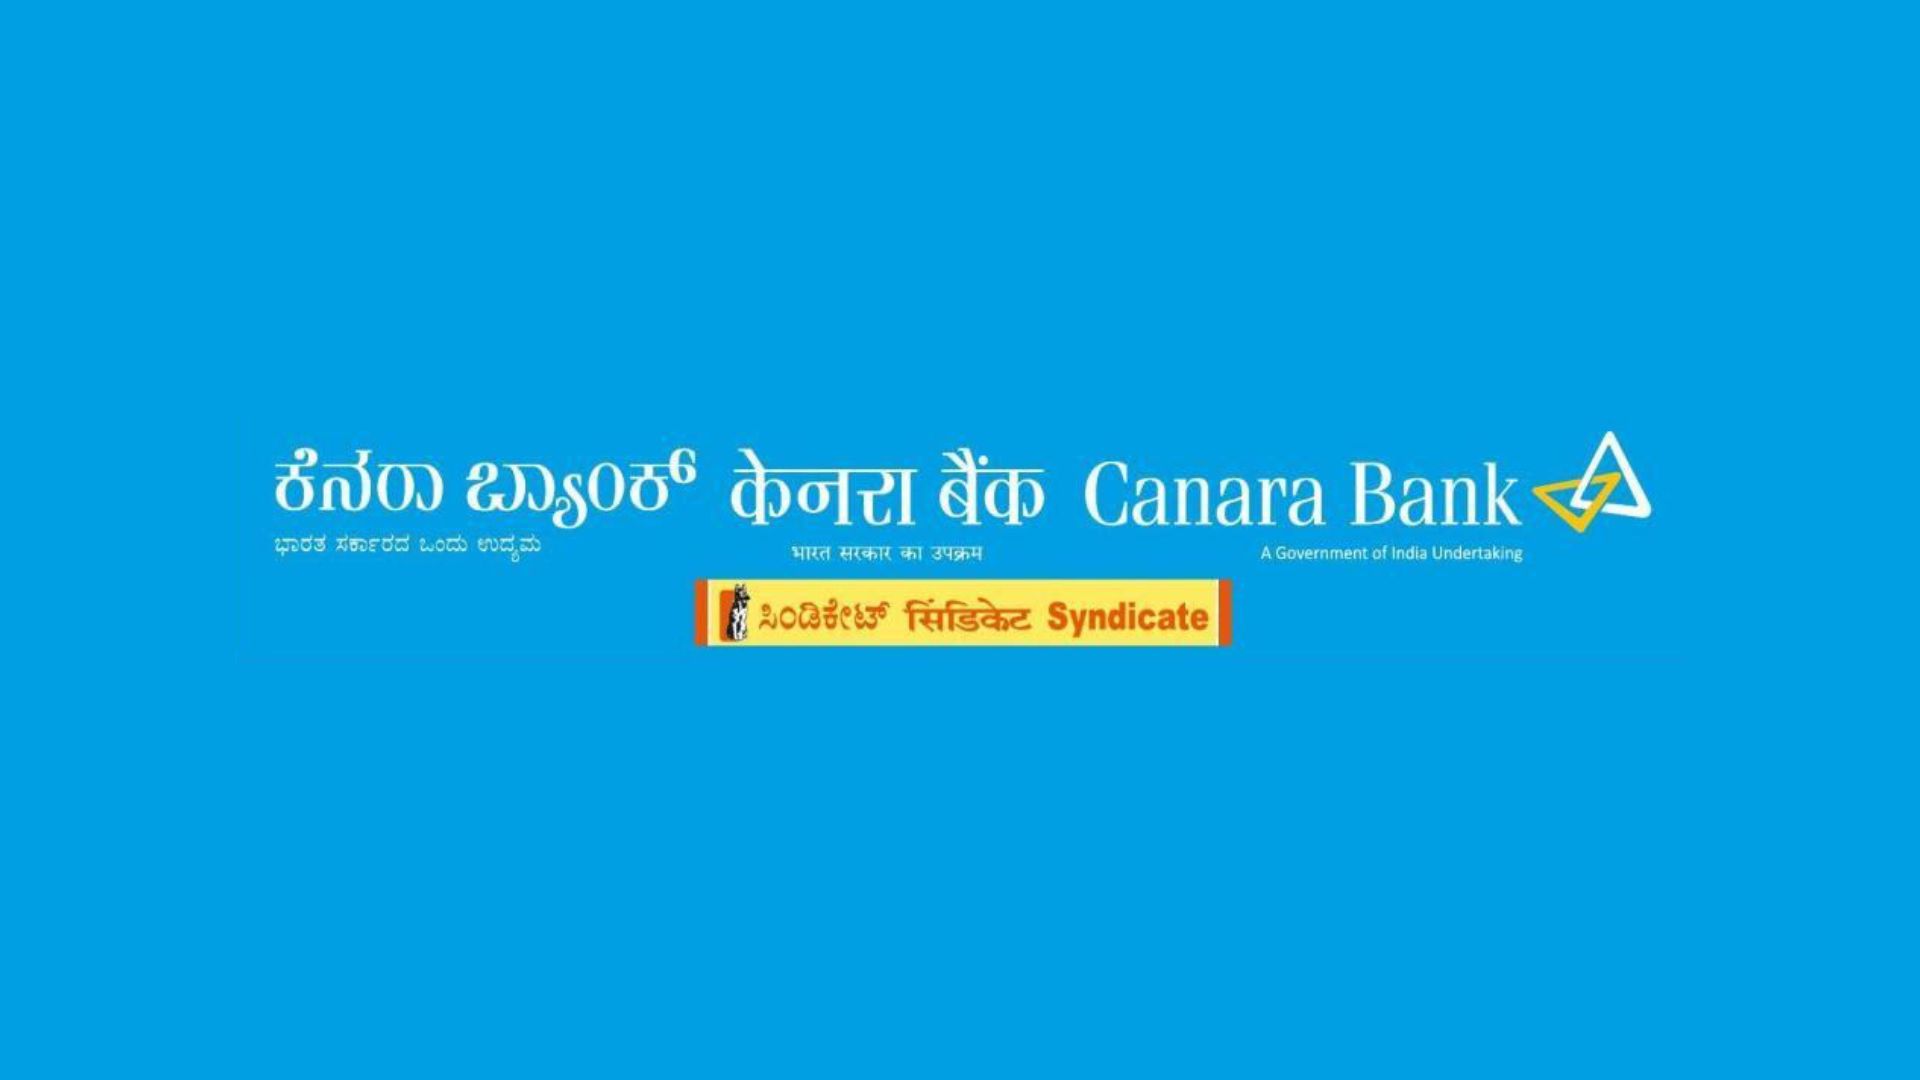 Canara Bank raises Rs1,500 crore in Basel III-compliant Additional Tier I bonds 2021-22 Series II